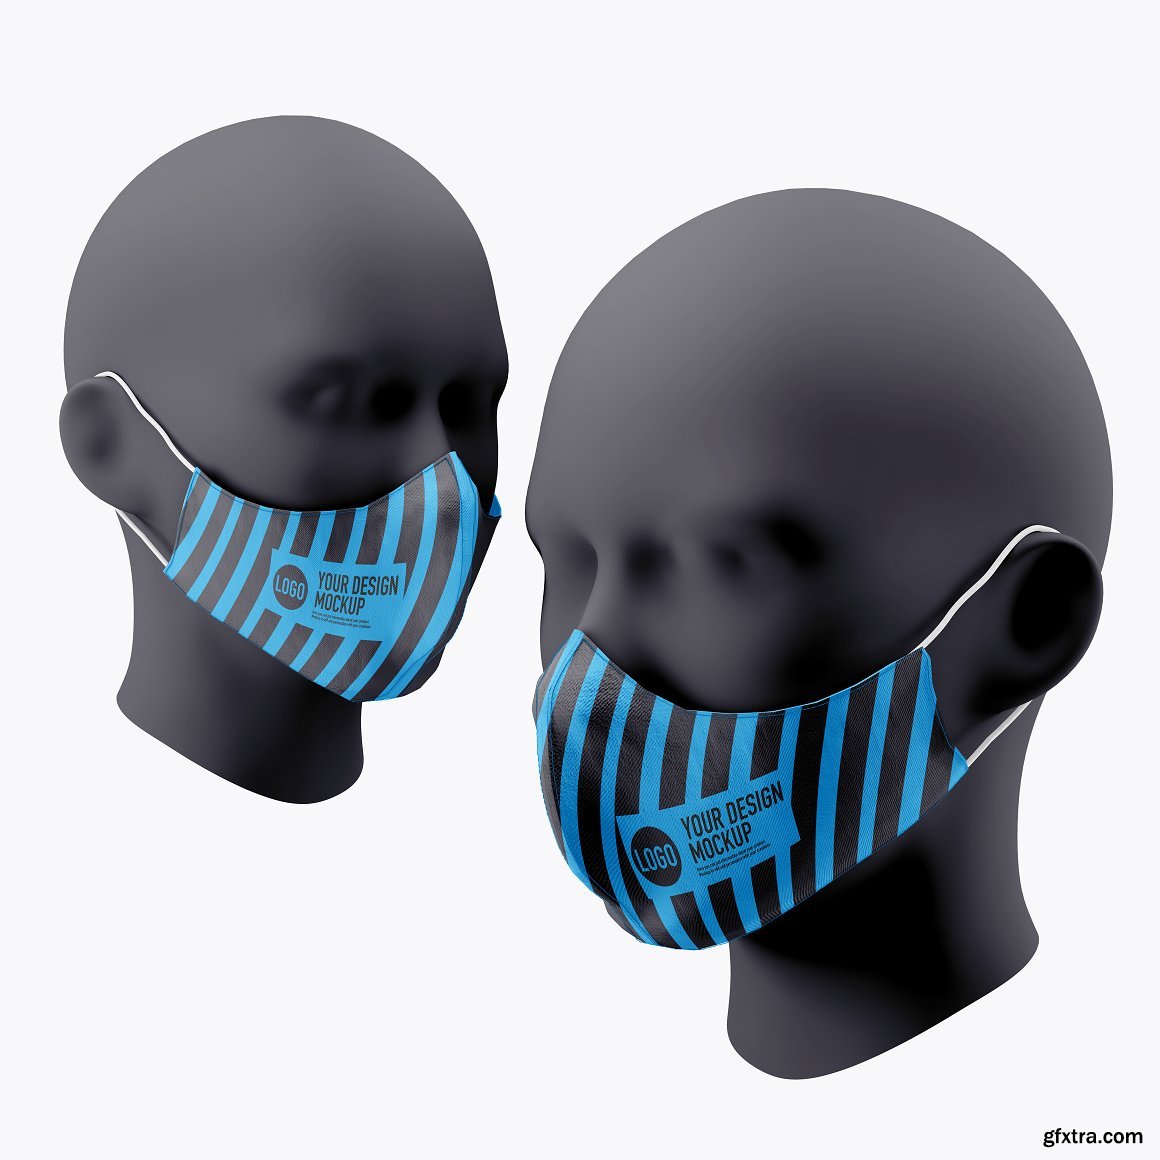 Download CreativeMarket - Medical face mask mockup 5318413 » GFxtra